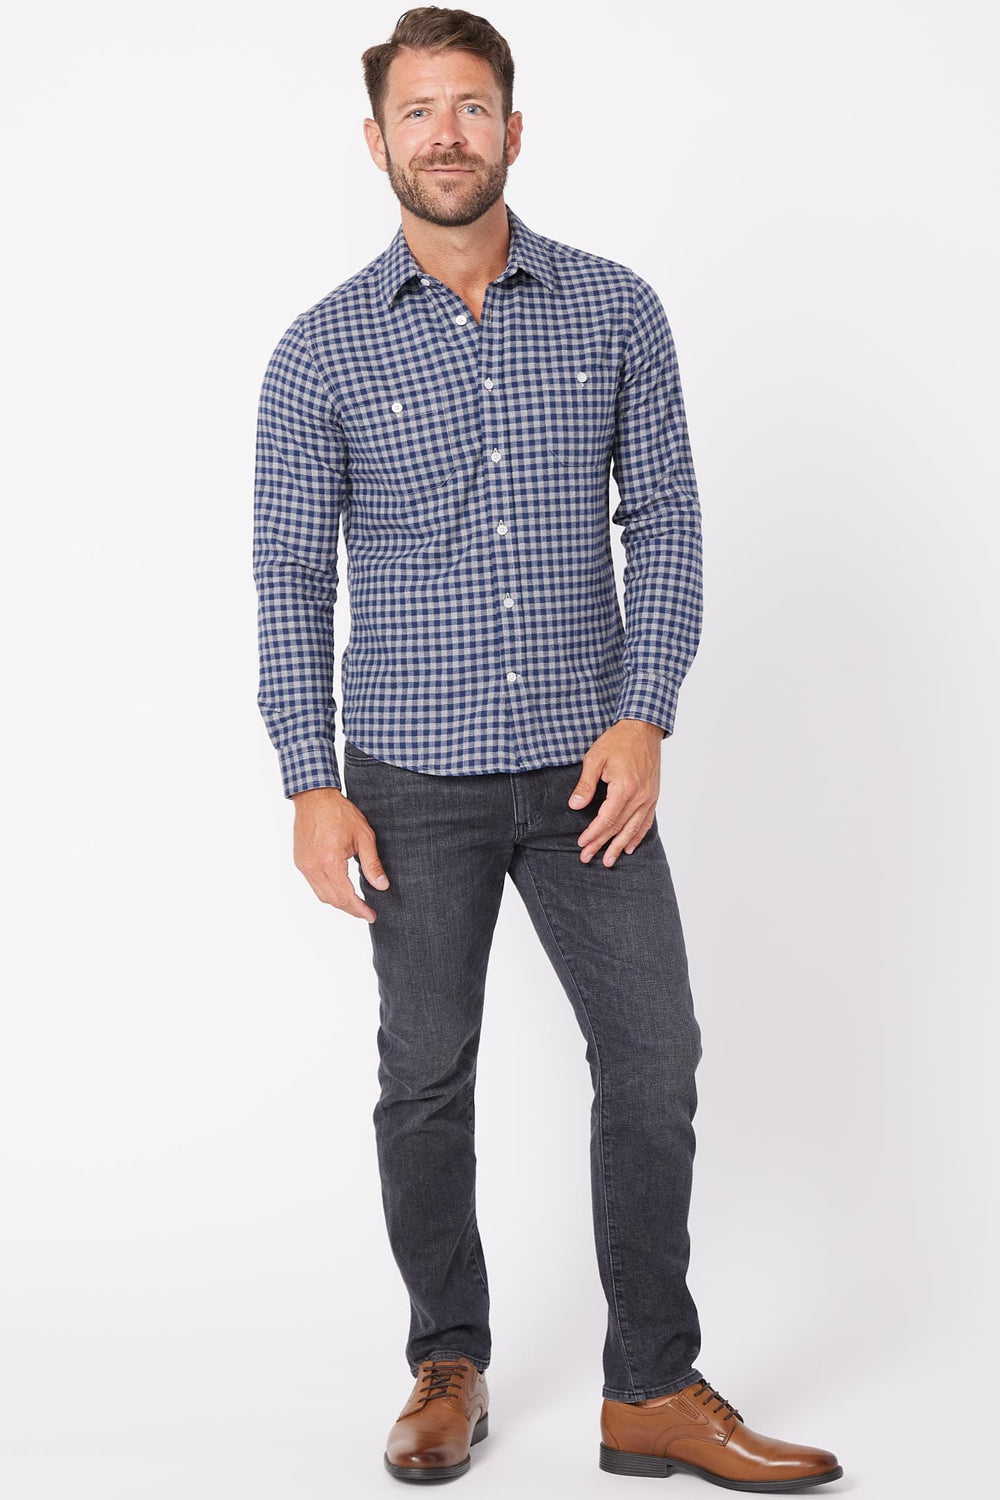 Buy Alberta Gingham Flannel Button-Down Shirt for Short Men | Ash & Erie   Flannel Everyday Shirt